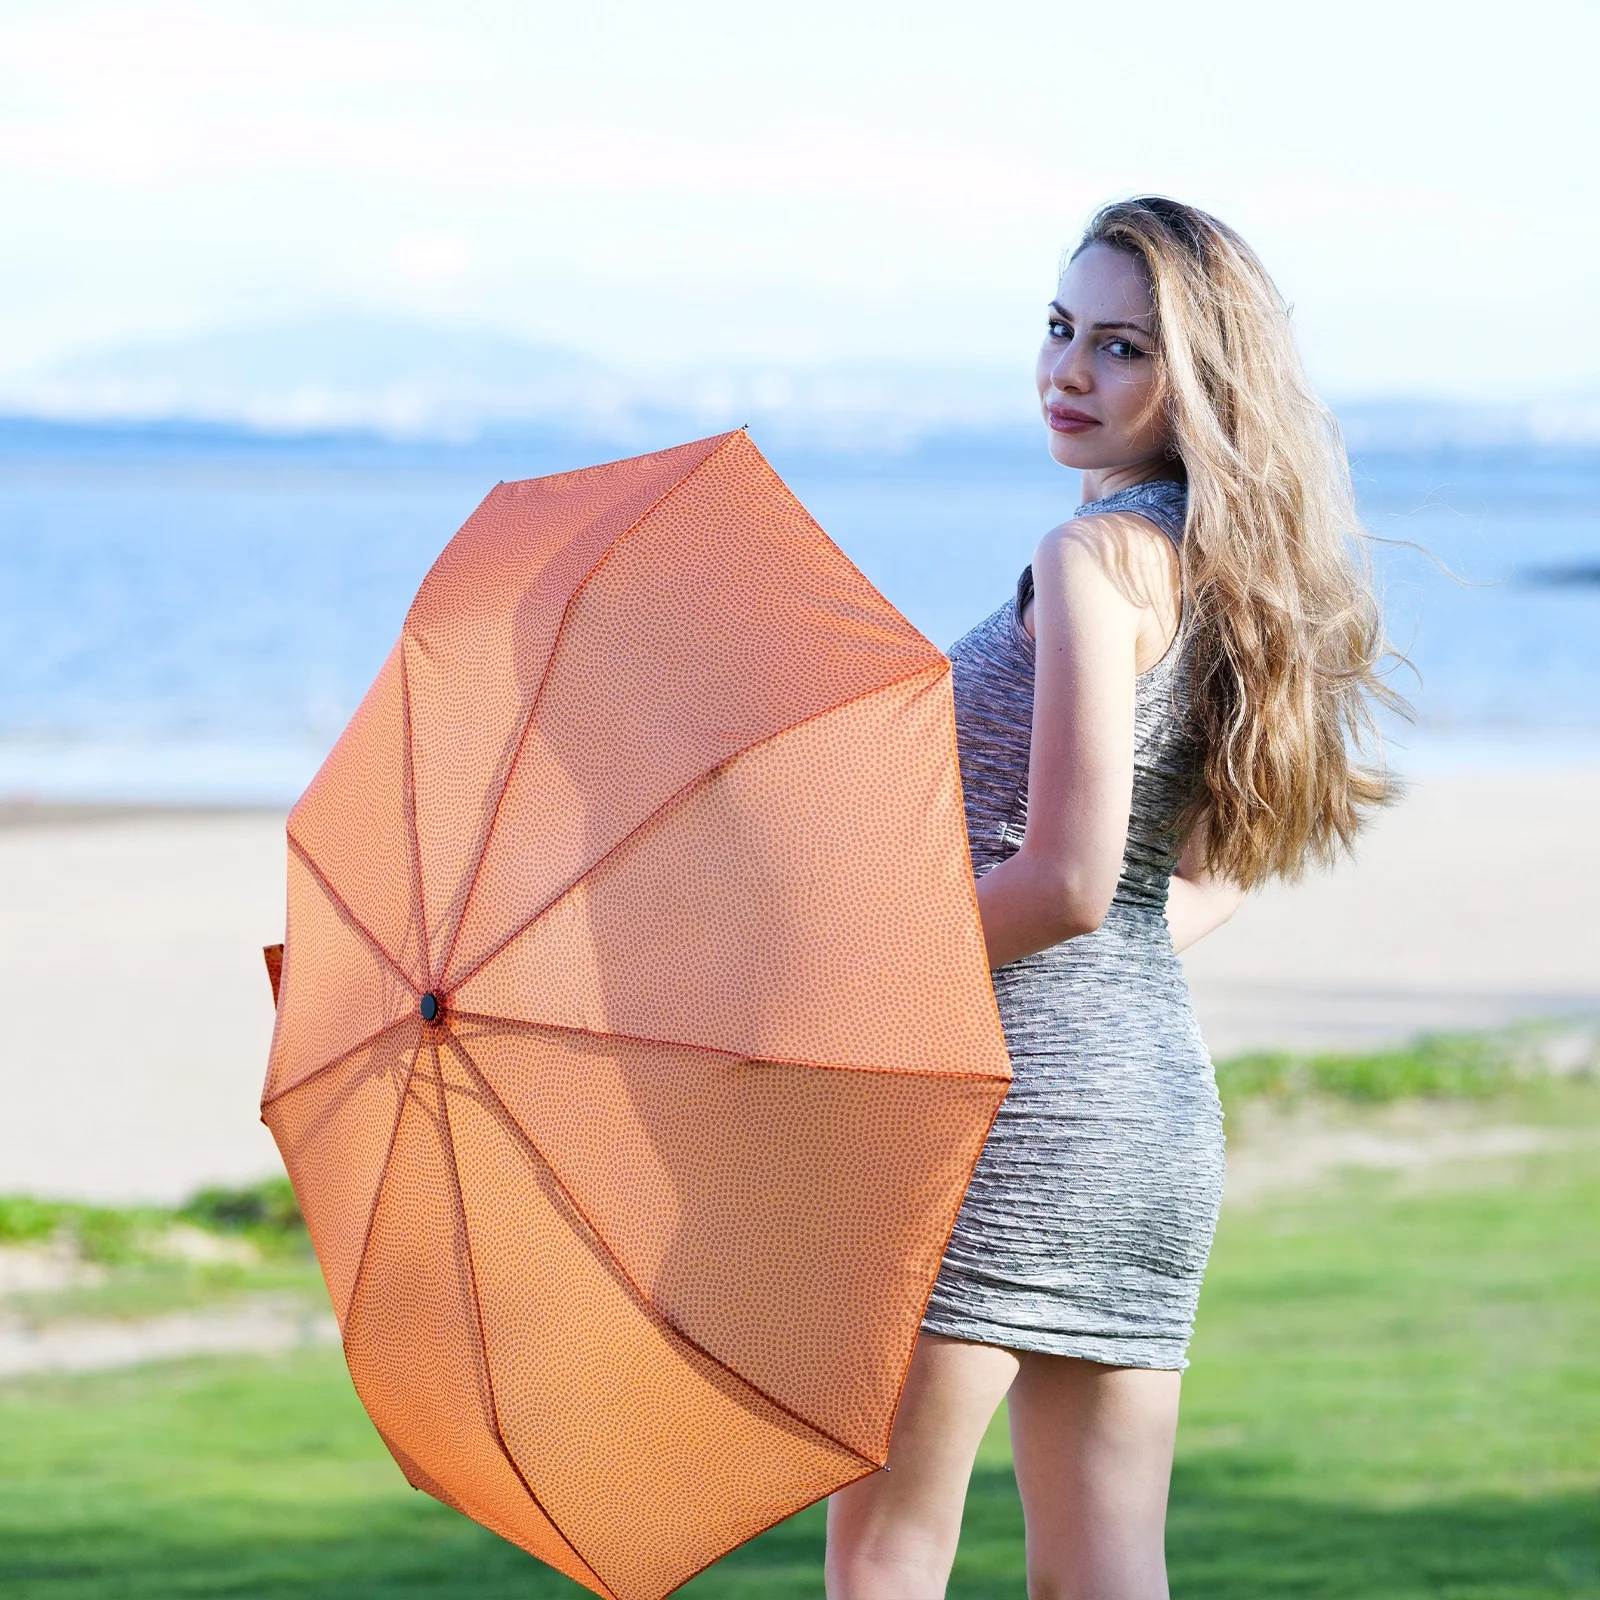 

New Arrival cheap 3 folding windproof/ rainproof umbrella with orange spot color